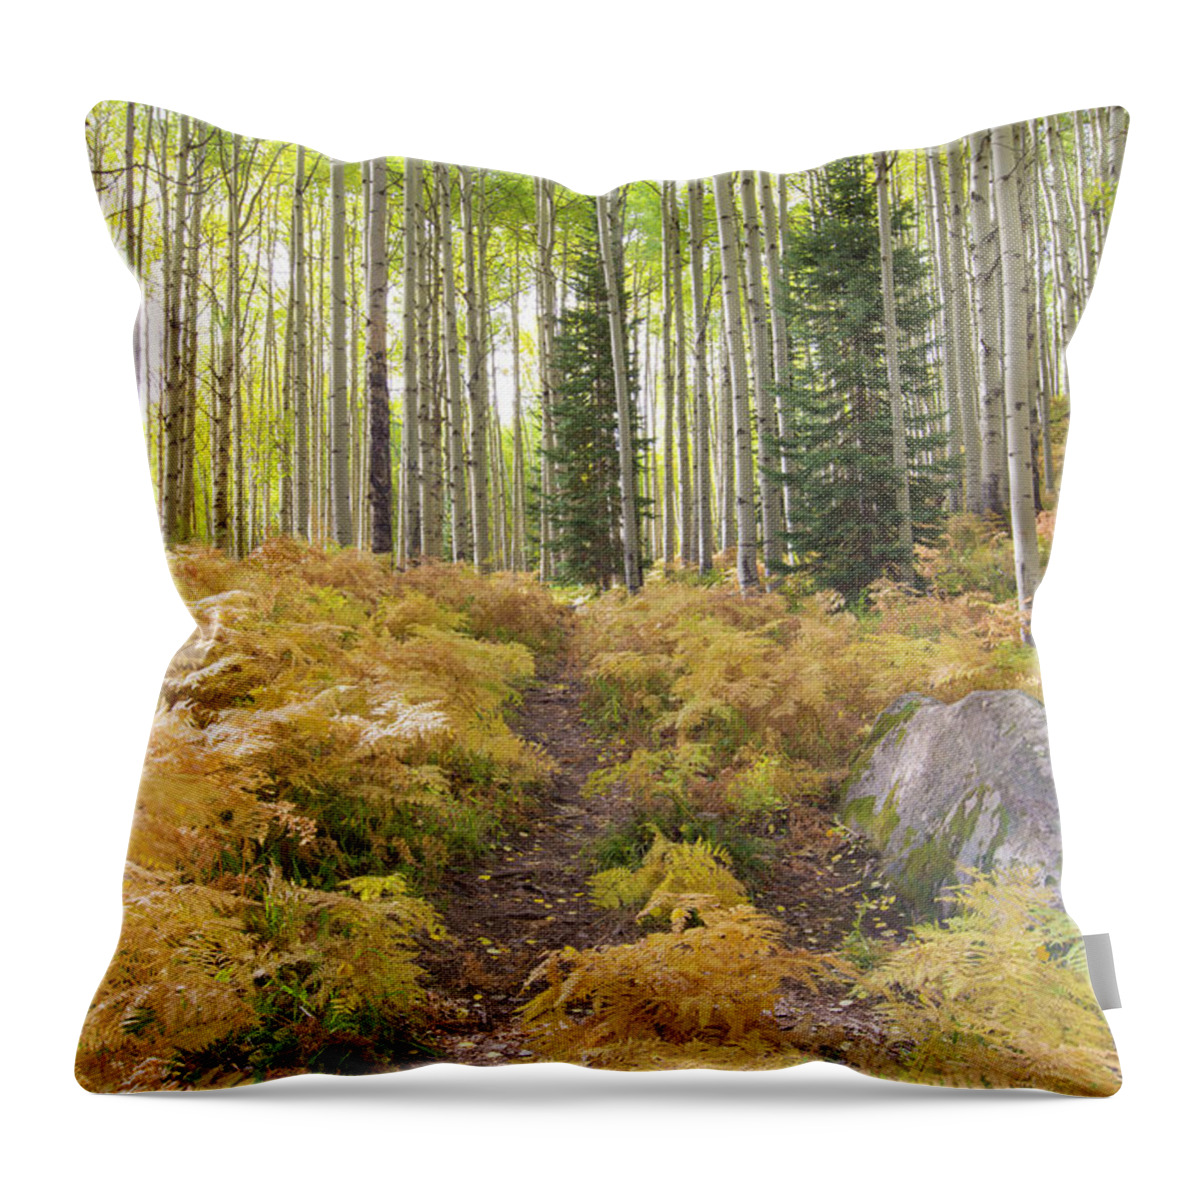 Ferns Throw Pillow featuring the photograph Fern Path by Nancy Dunivin